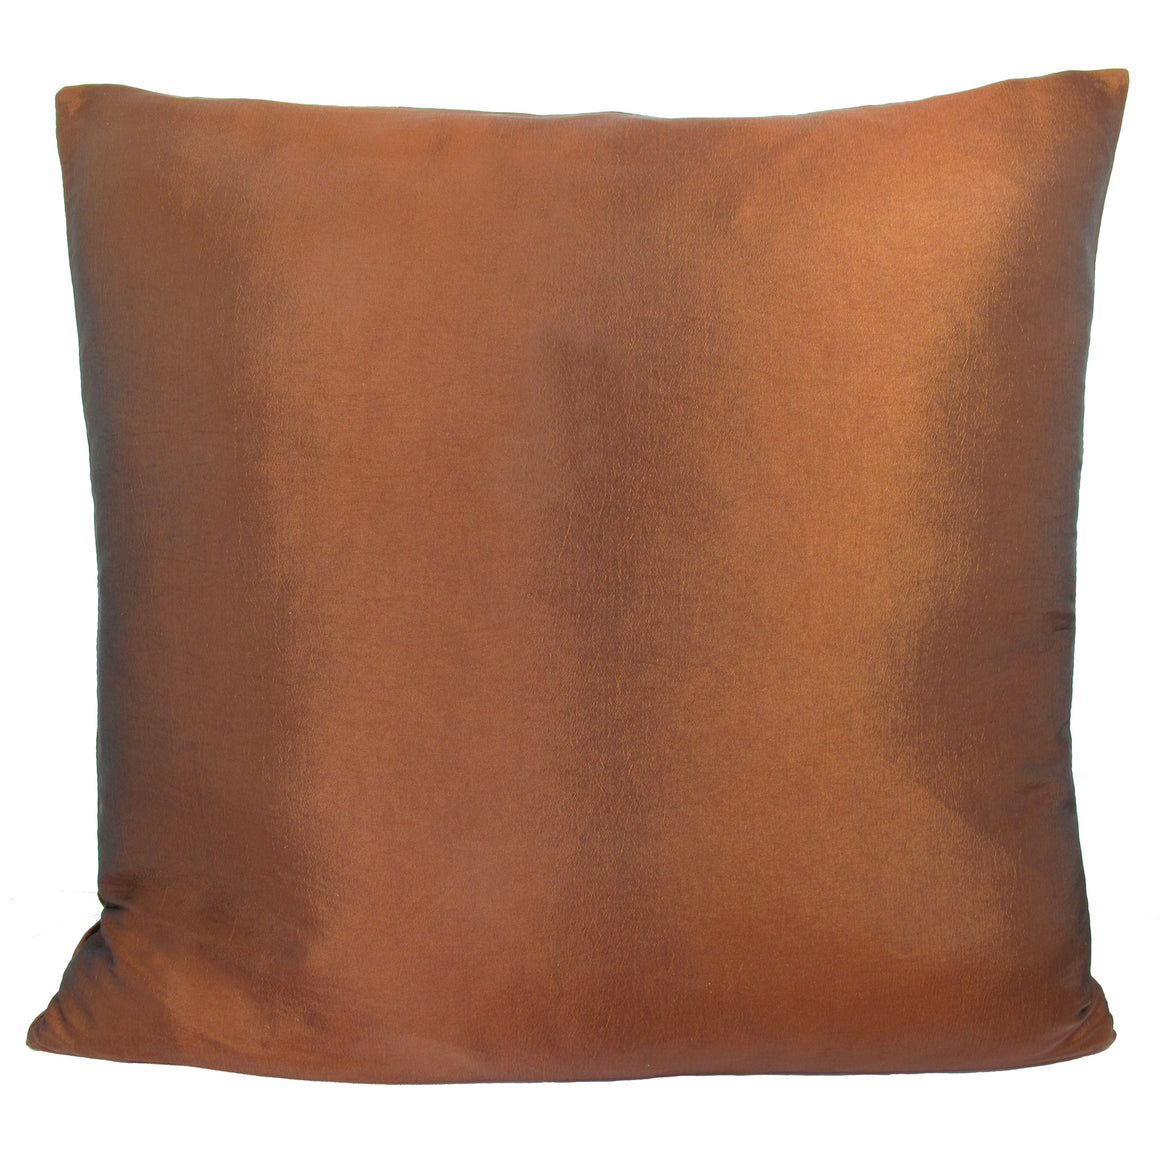 Thai Silk Throw Pillow Cover, Lotus Design, Medium Brown - TropicaZona